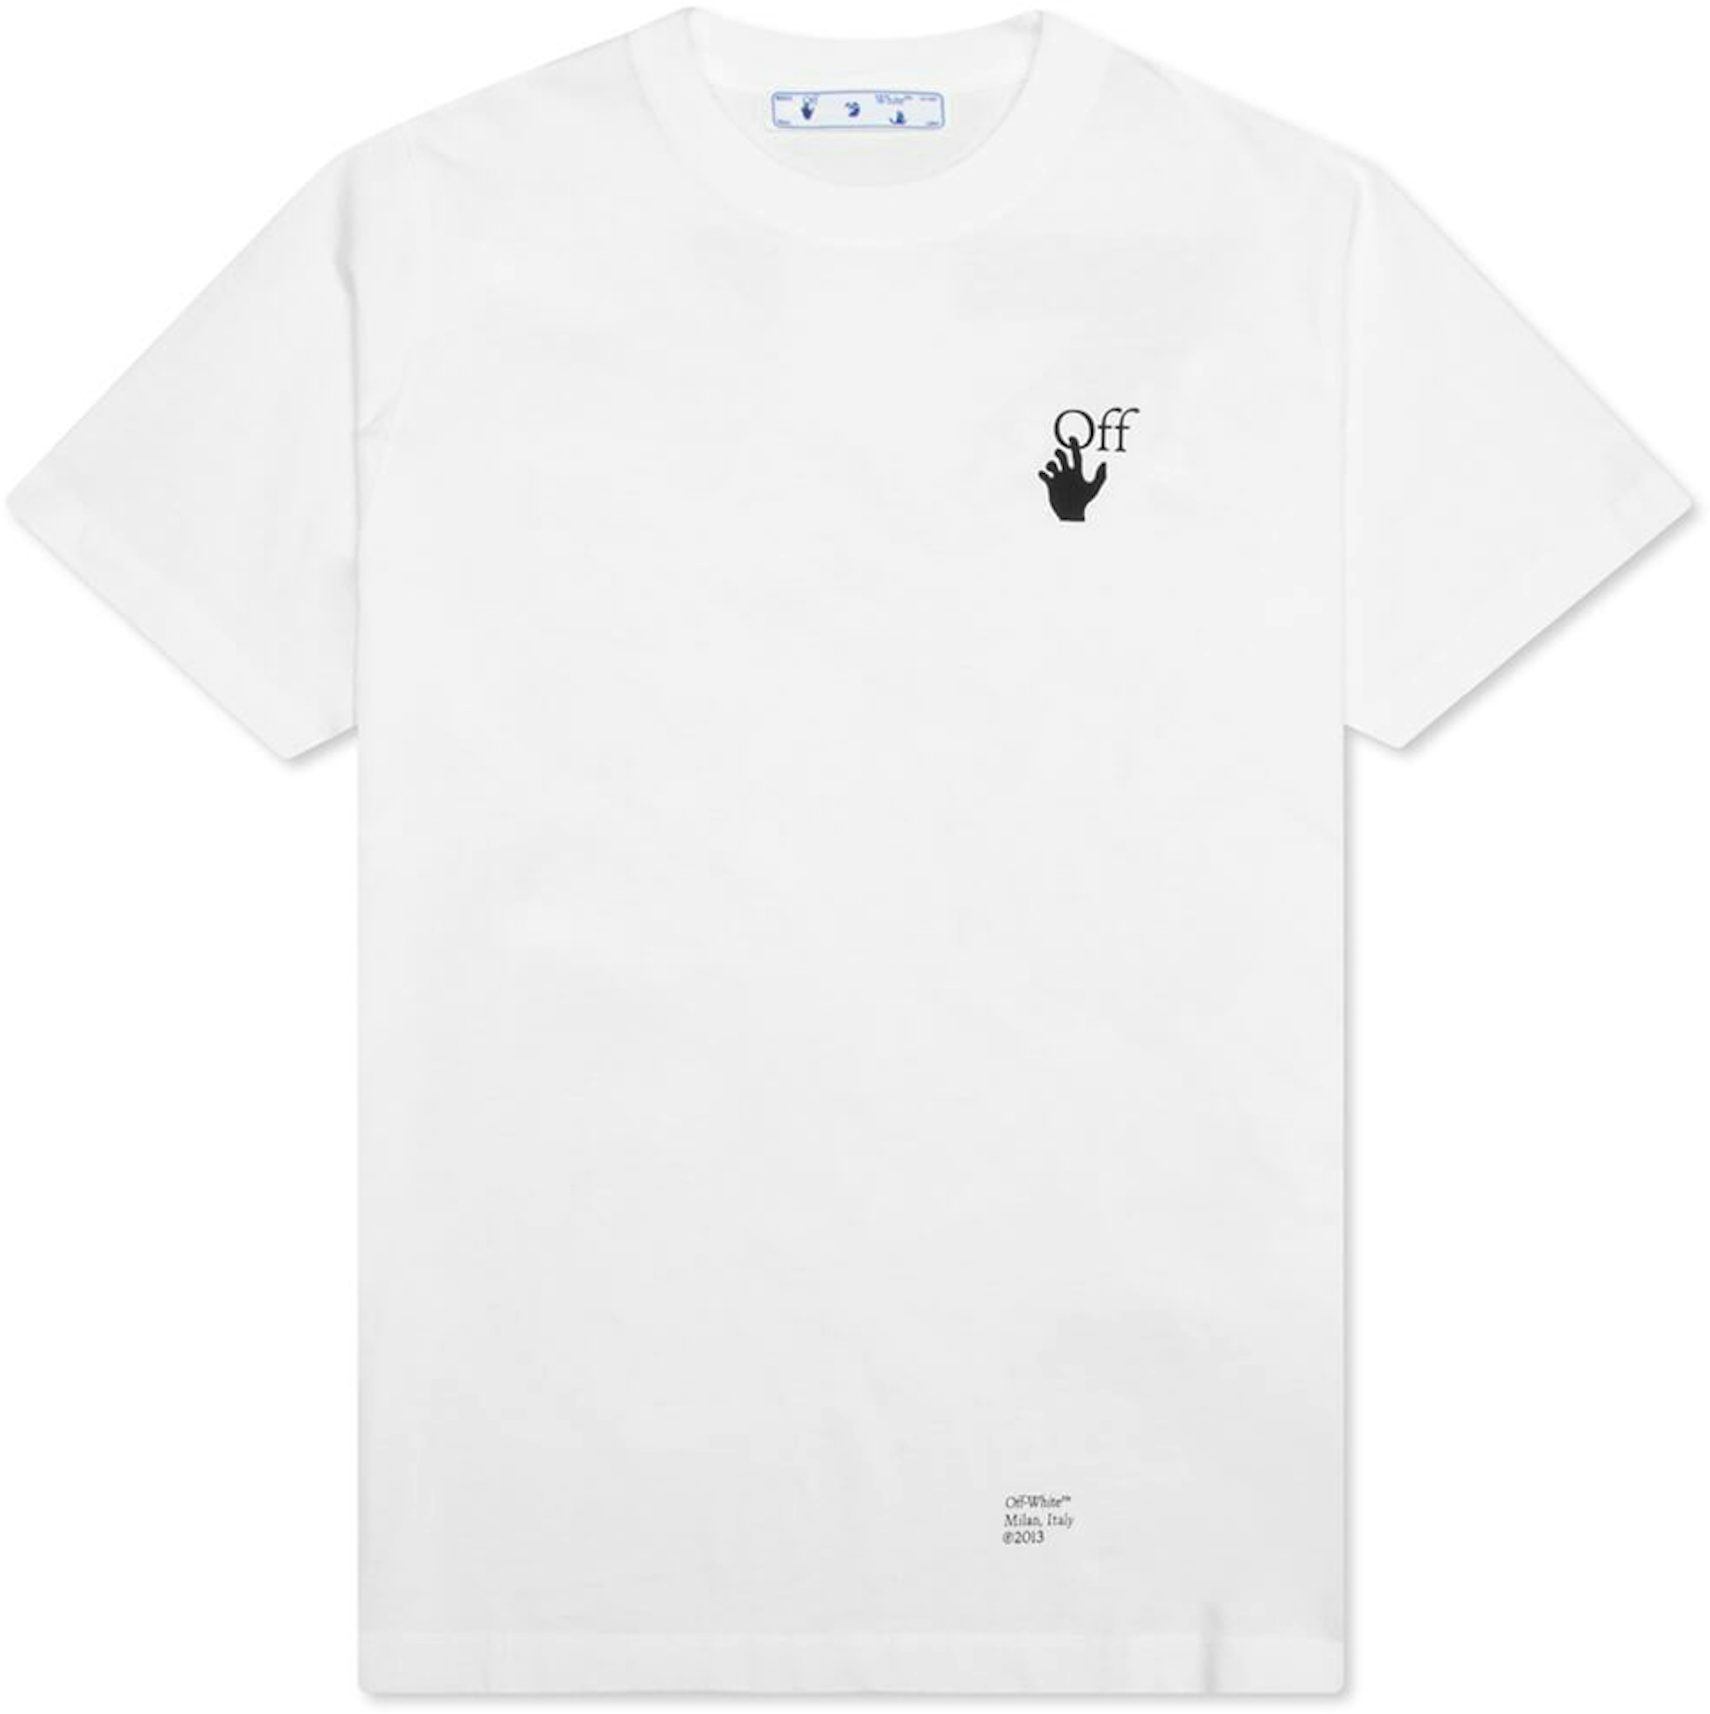 Nikelab x OFF-WHITE Mercurial NRG X Tee White  Tee shirt fashion, Tee  shirt designs, Shirt logo design